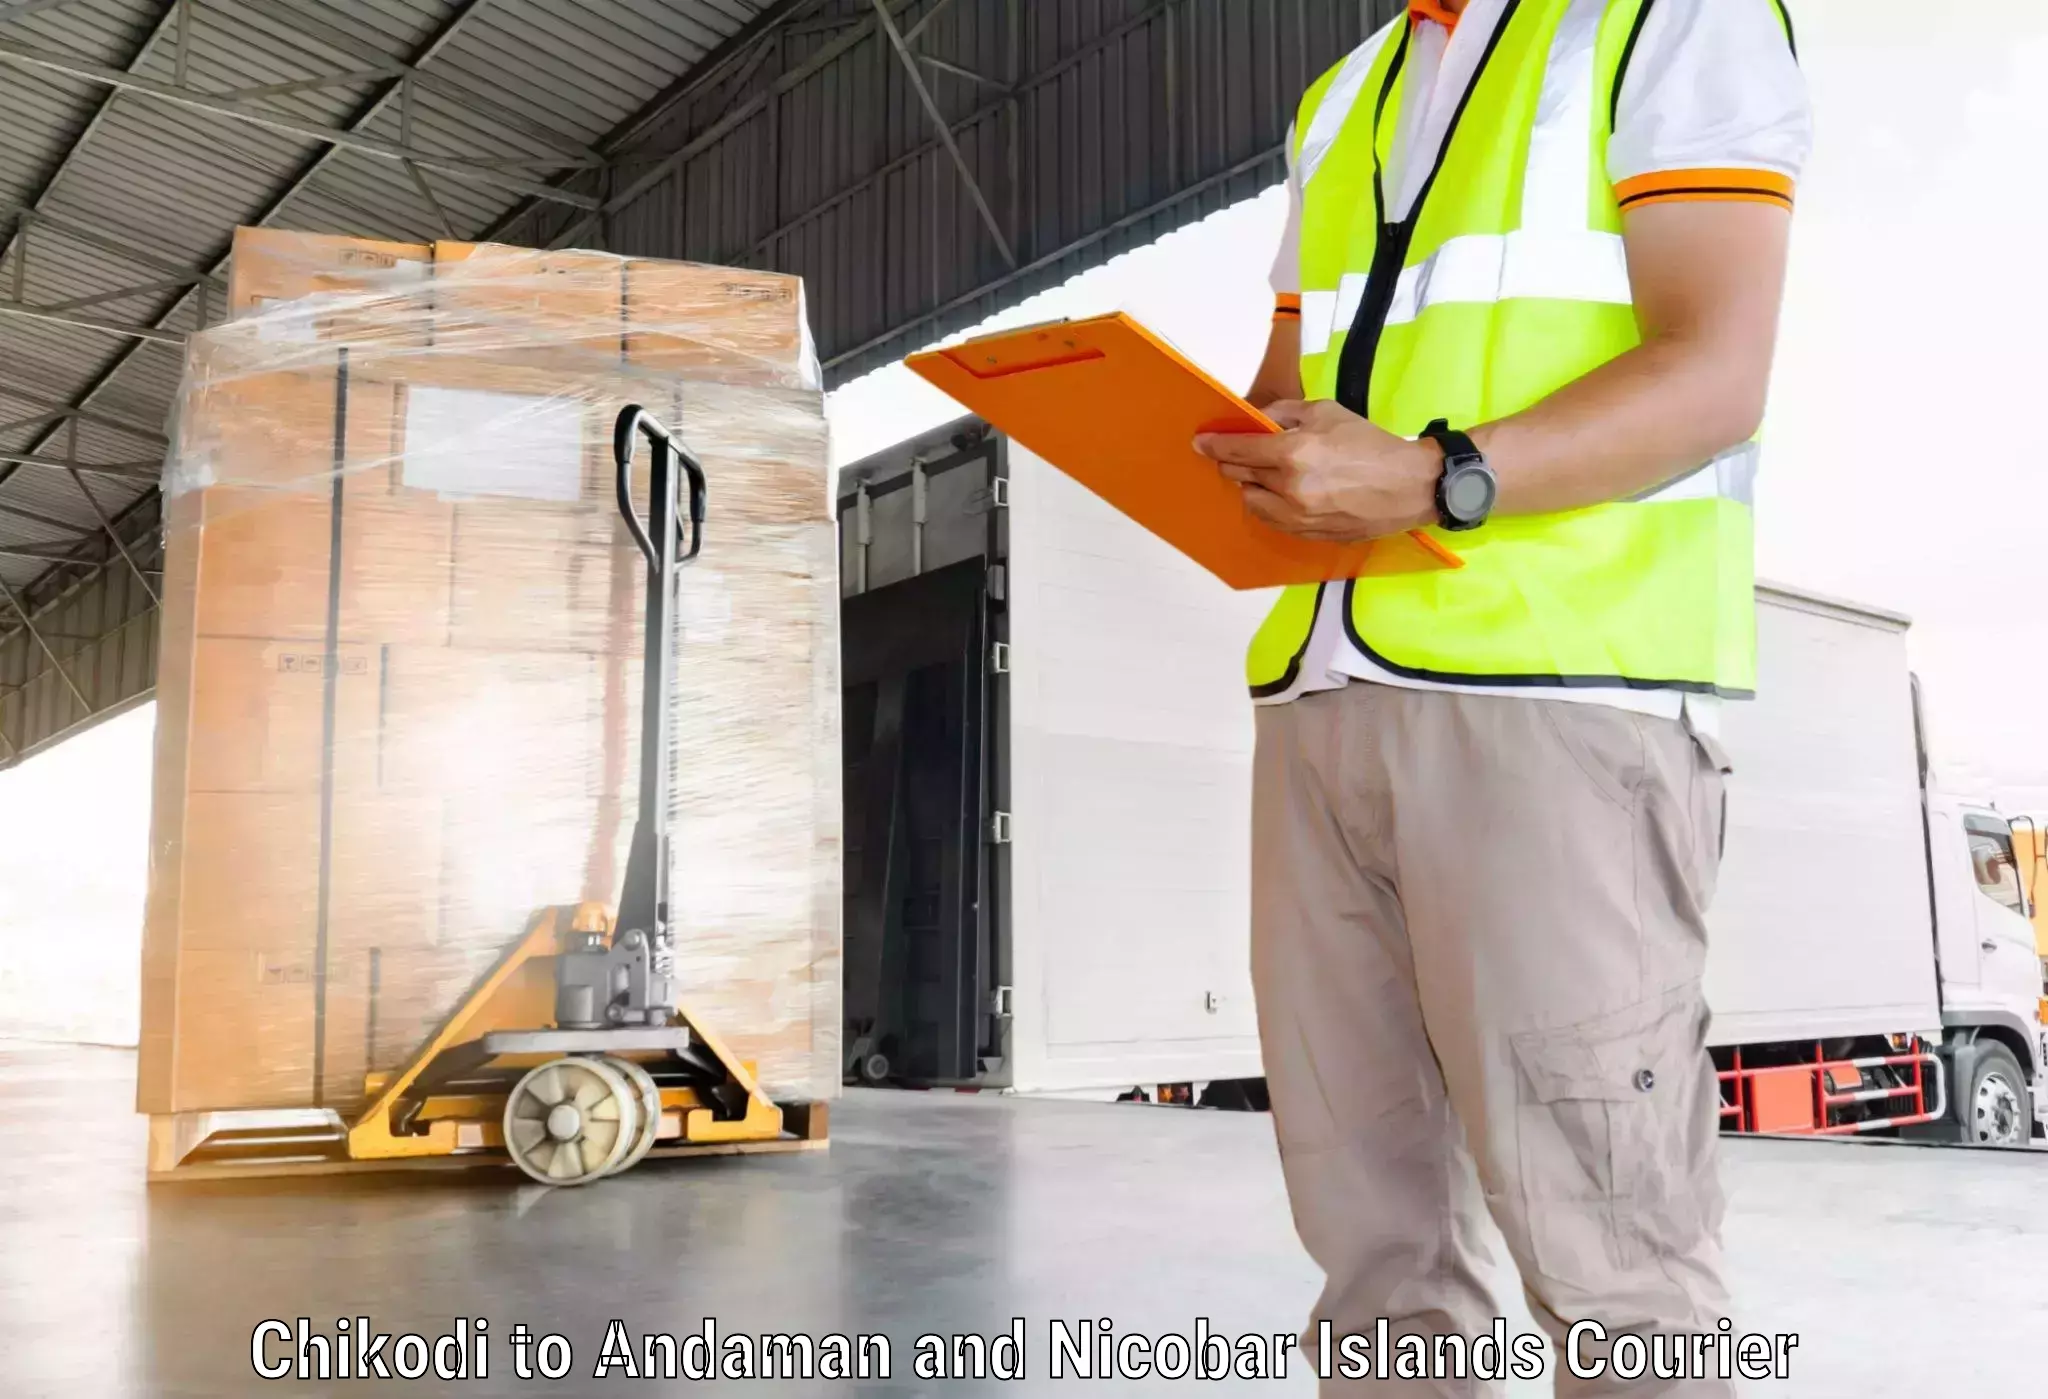 Customer-focused courier Chikodi to Port Blair